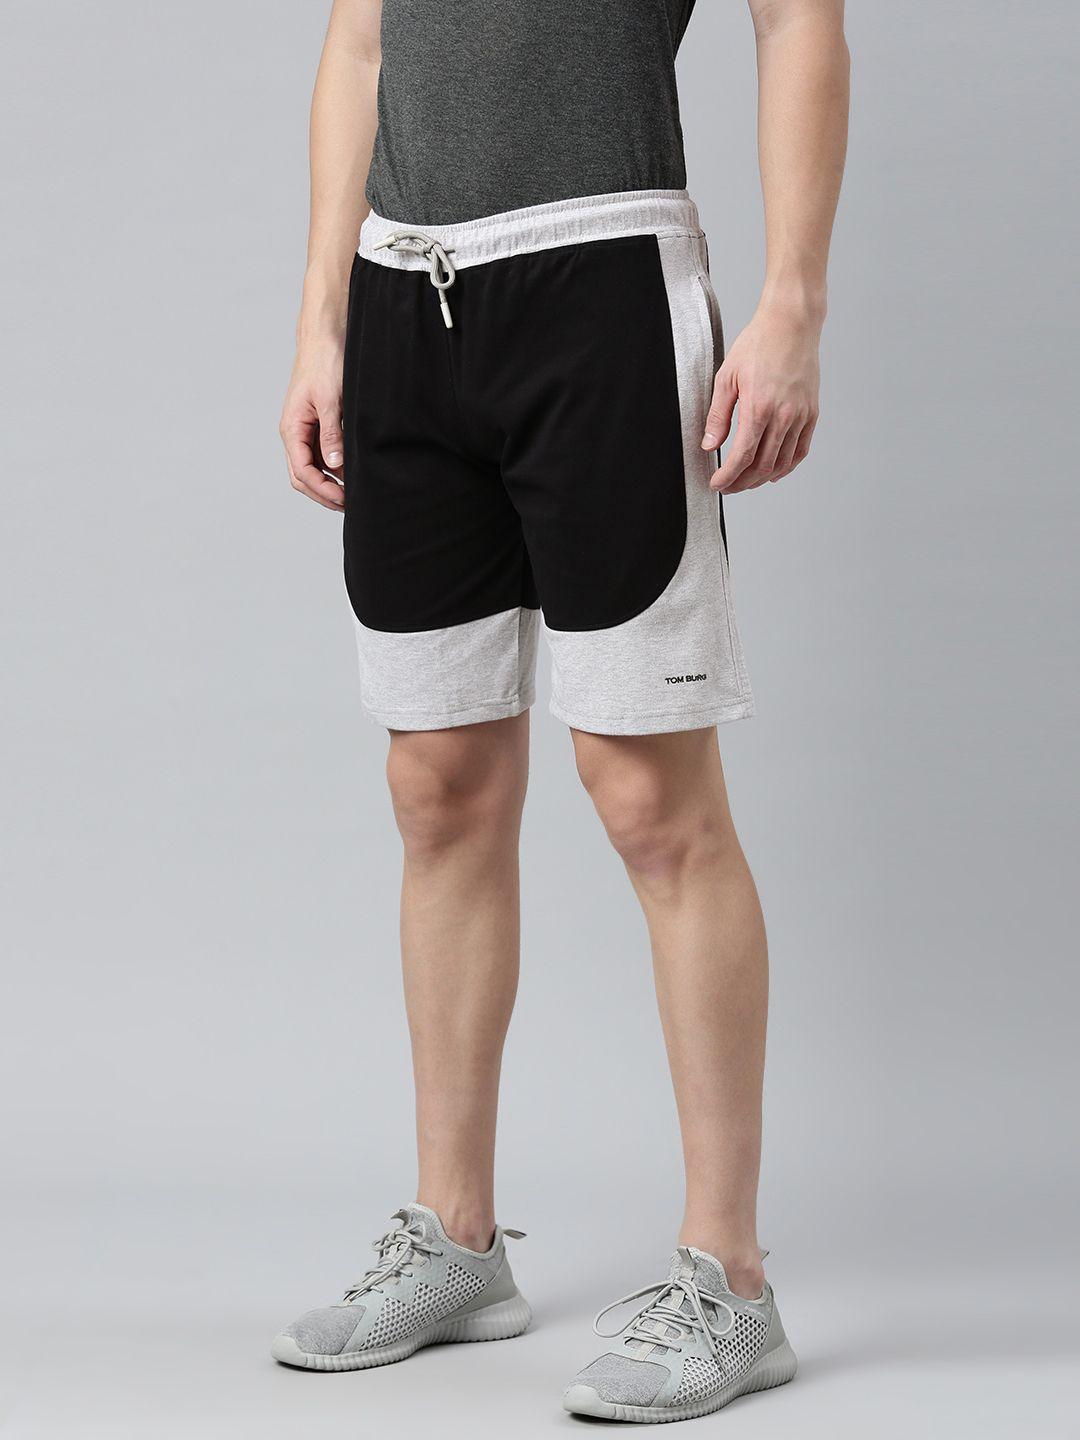 tom burg men black & grey melange colourblocked premium cotton slim fit sports shorts